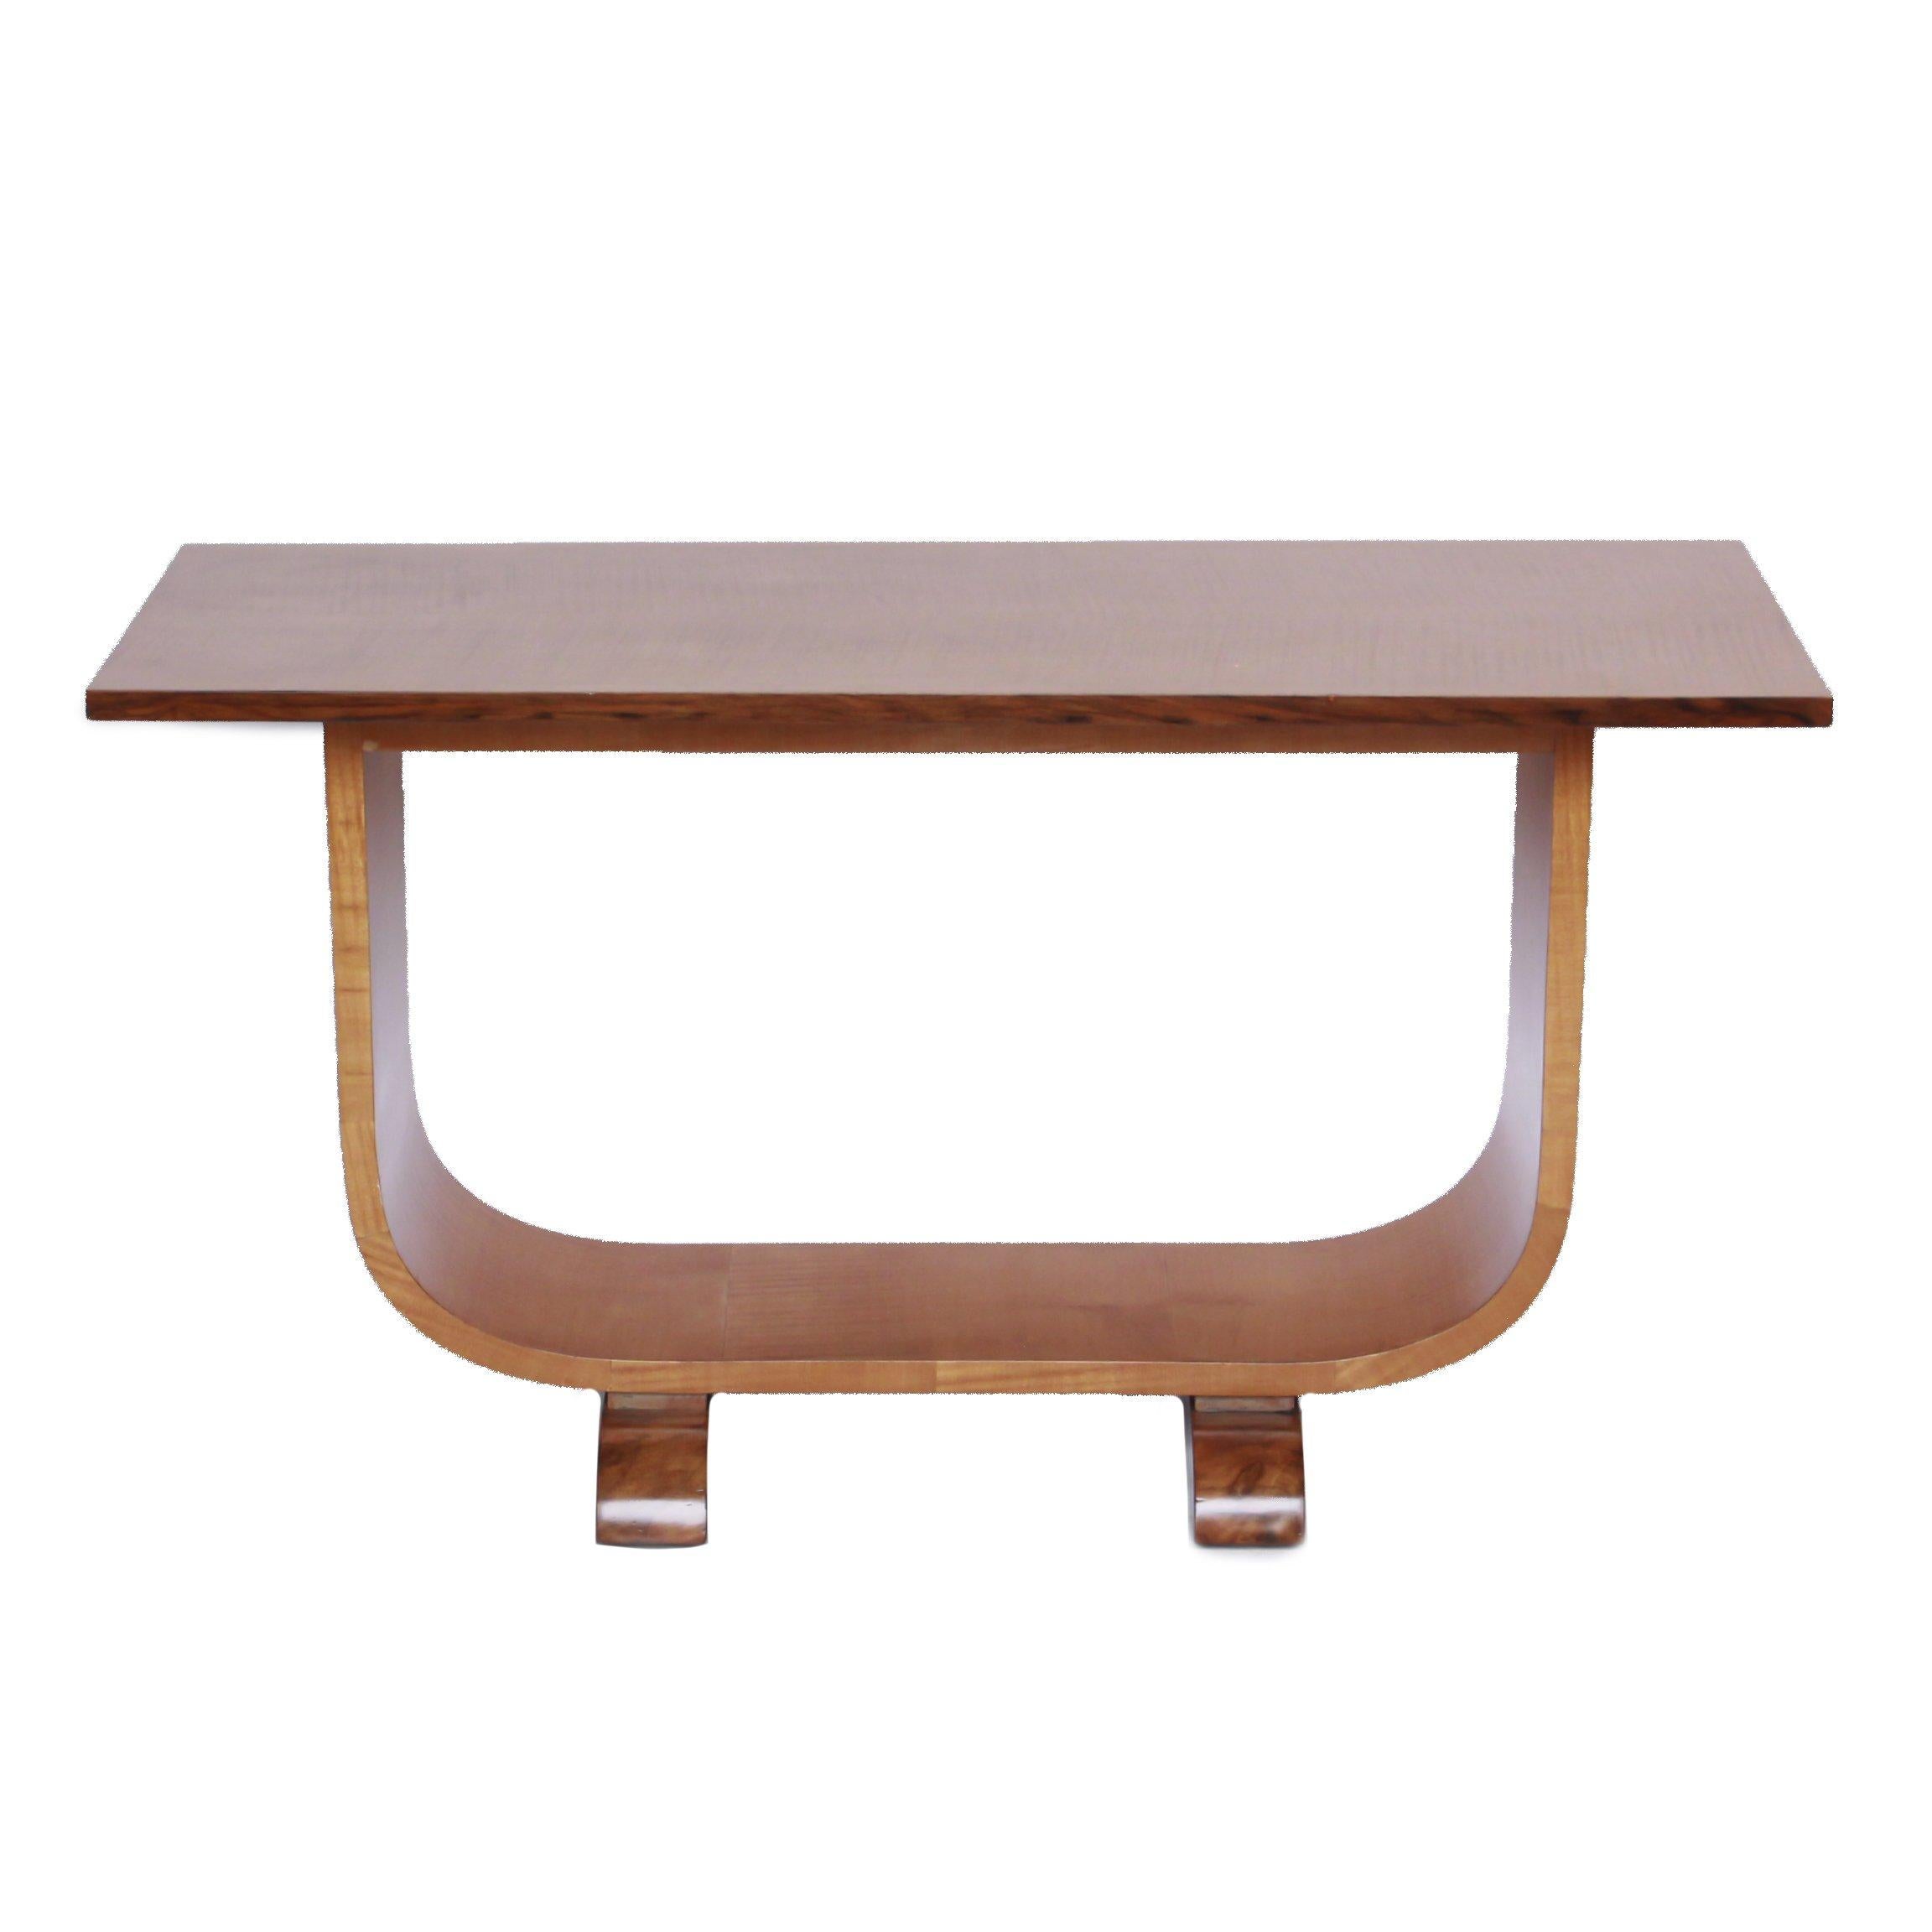 An Art Deco coffee table by Bowman Bros Ltd. satin birch with walnut feet and a u-shaped base.

Dimensions: H 50cm, W 92cm, D 34cm 

Origin: English

Date: circa 1930

Item no: 1911194.